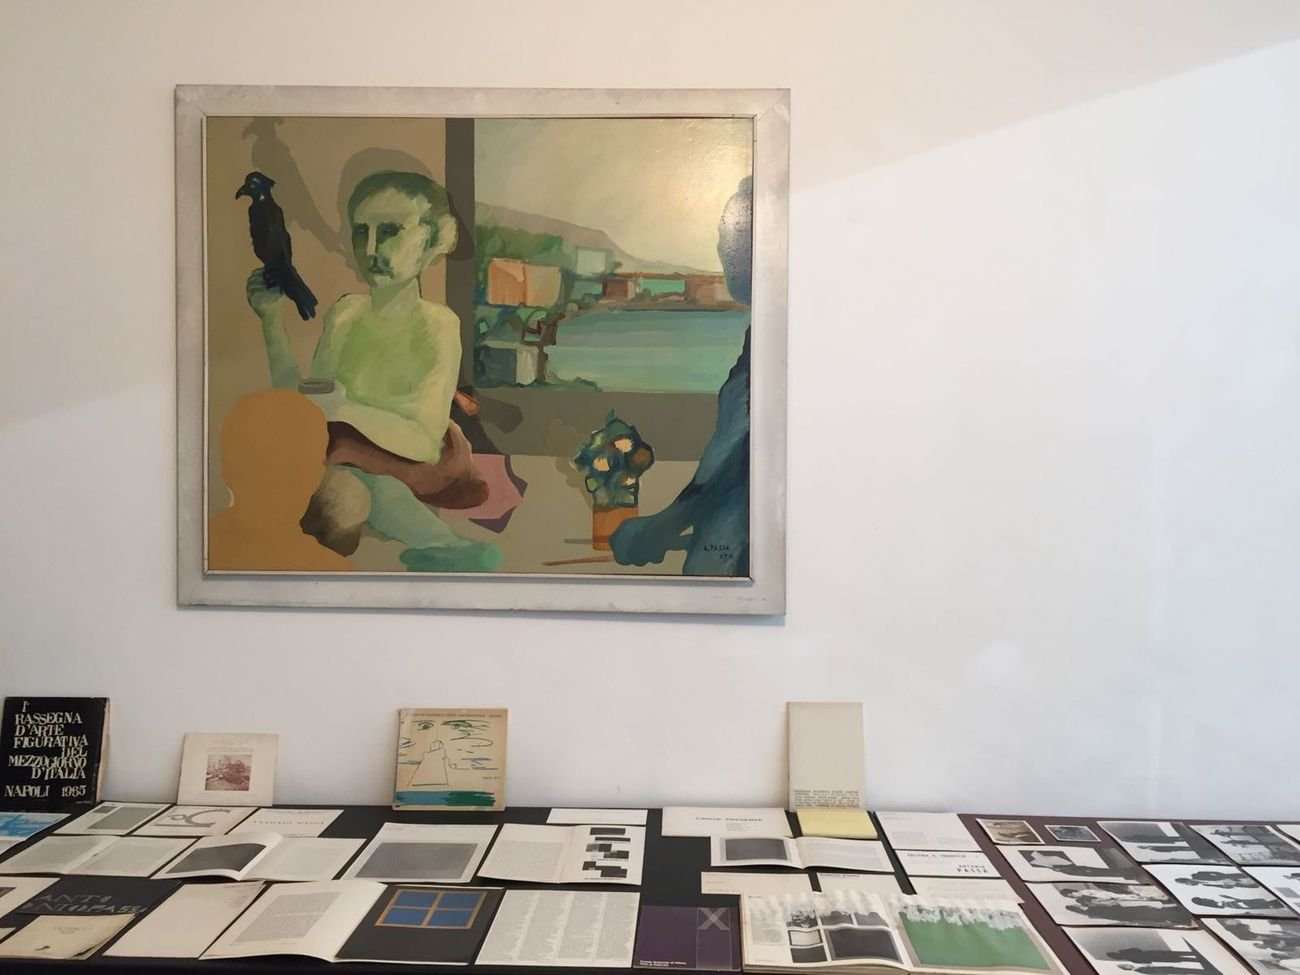 Antonio Passa. Tutto passa in tre mesi. Exhibition view at Archivio Menna, Roma 2018